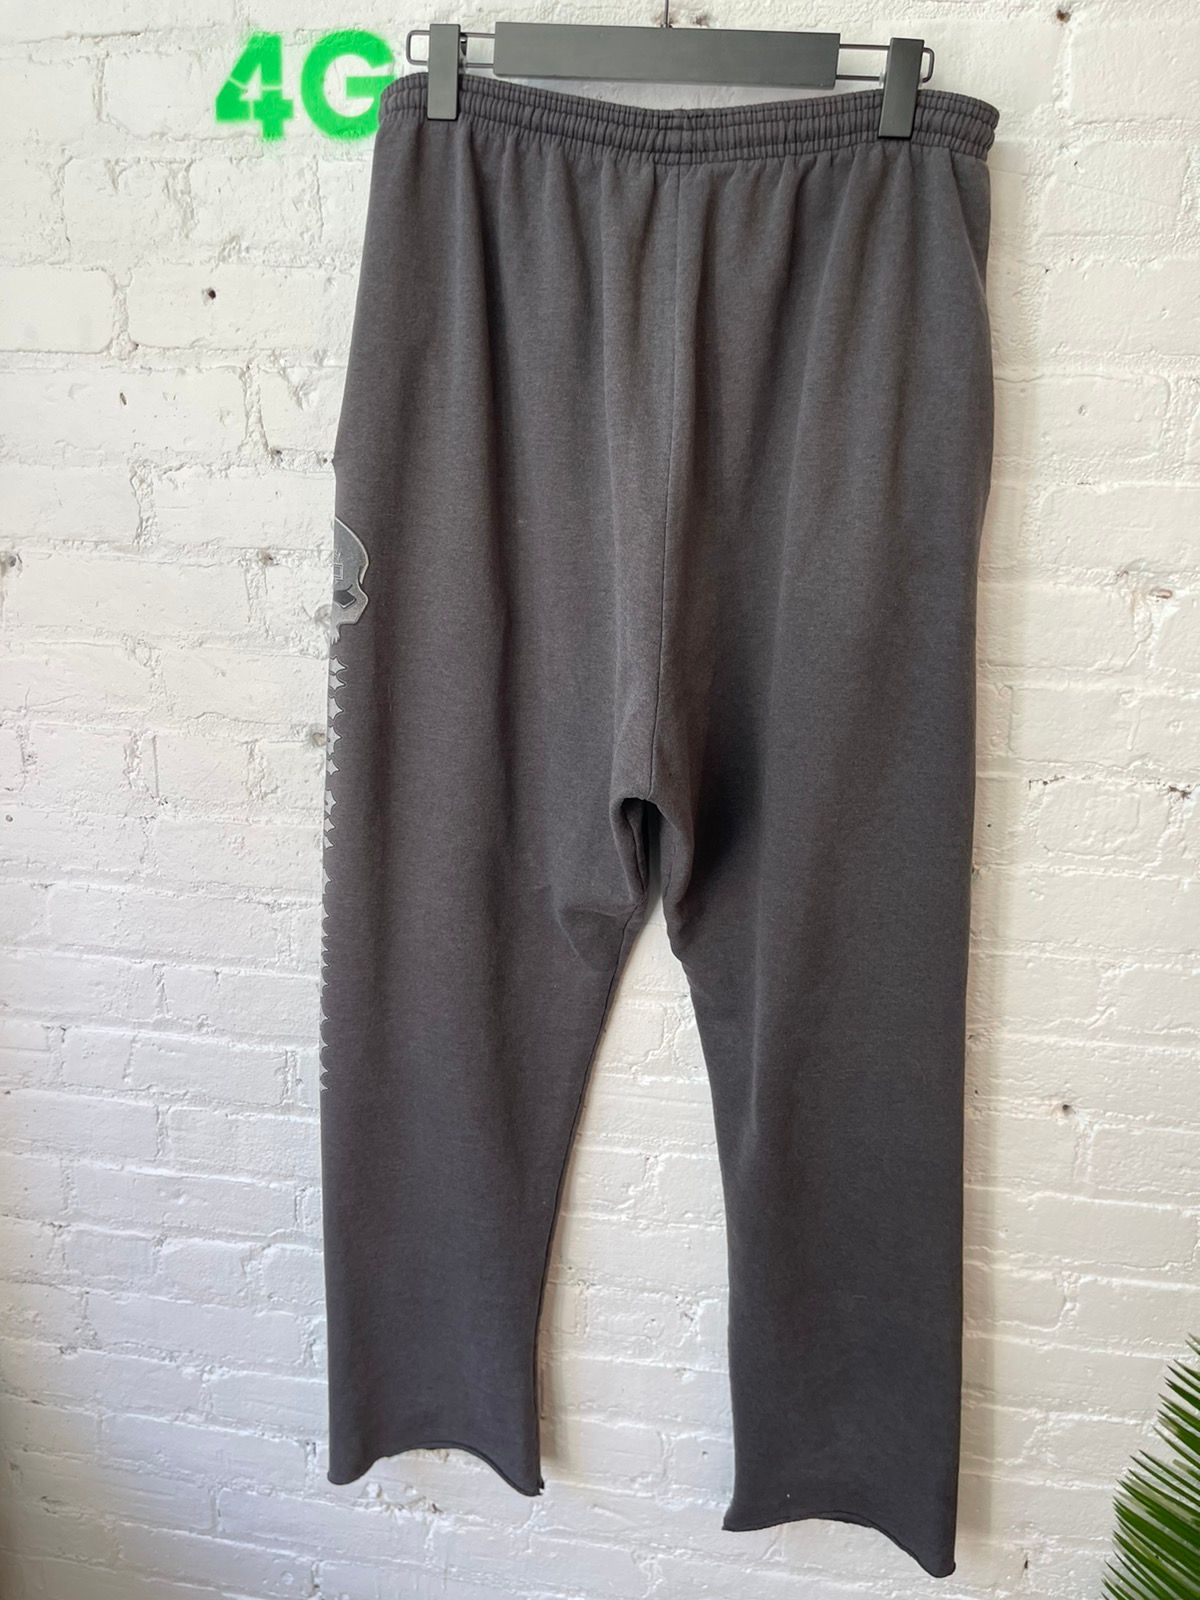 Vintage HARLEY Davidson SKULL Sweatpants SZ 32-34 pants